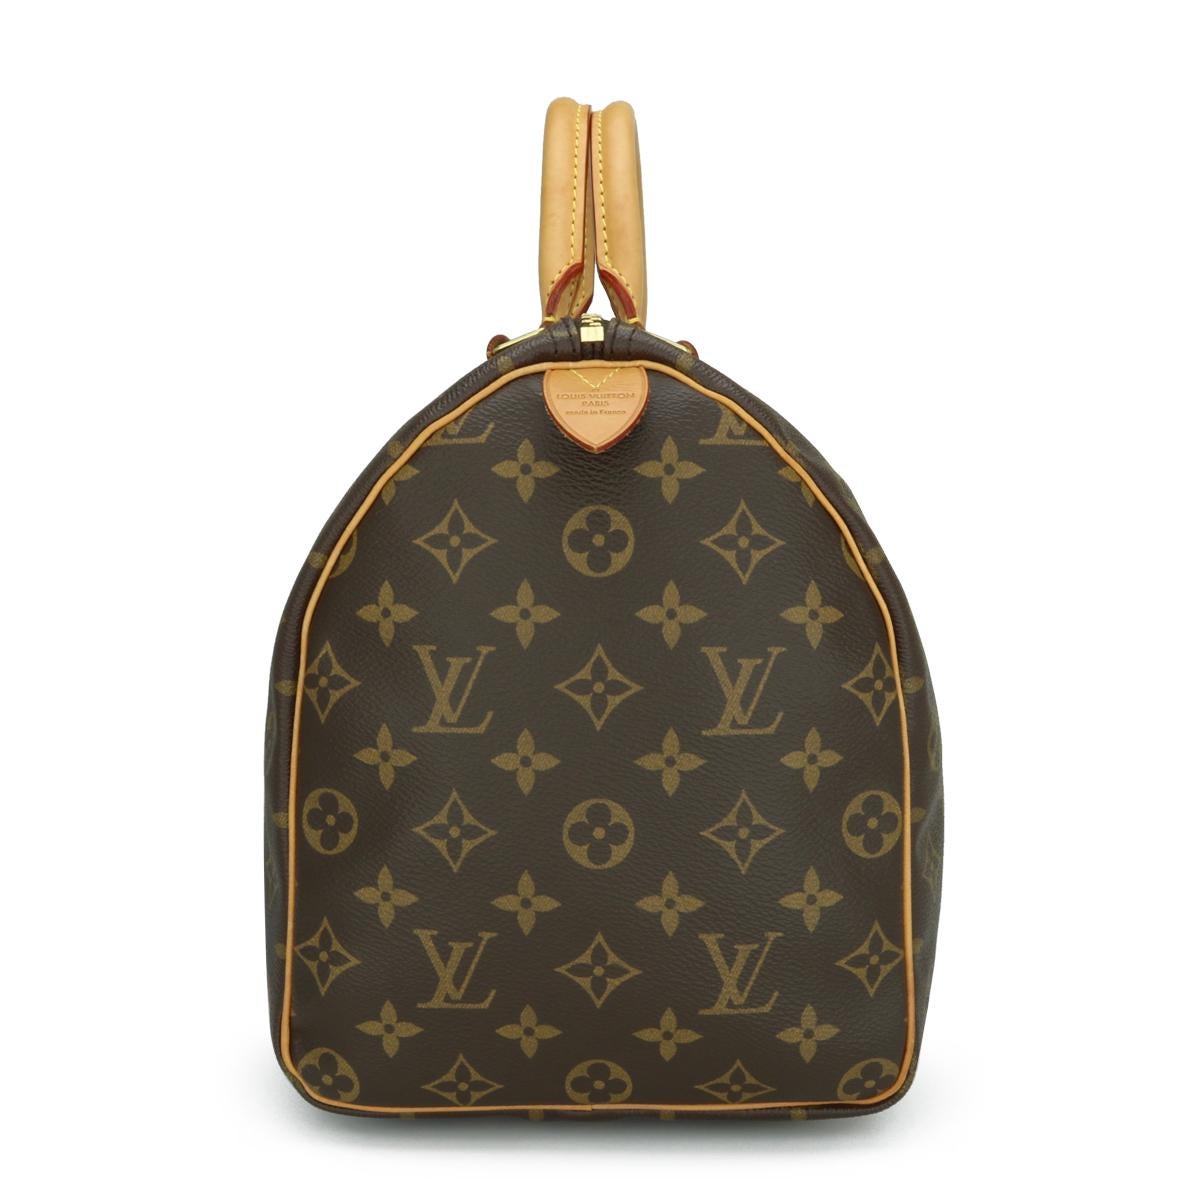 Women's or Men's Louis Vuitton Speedy 35 Bag in Monogram 2018